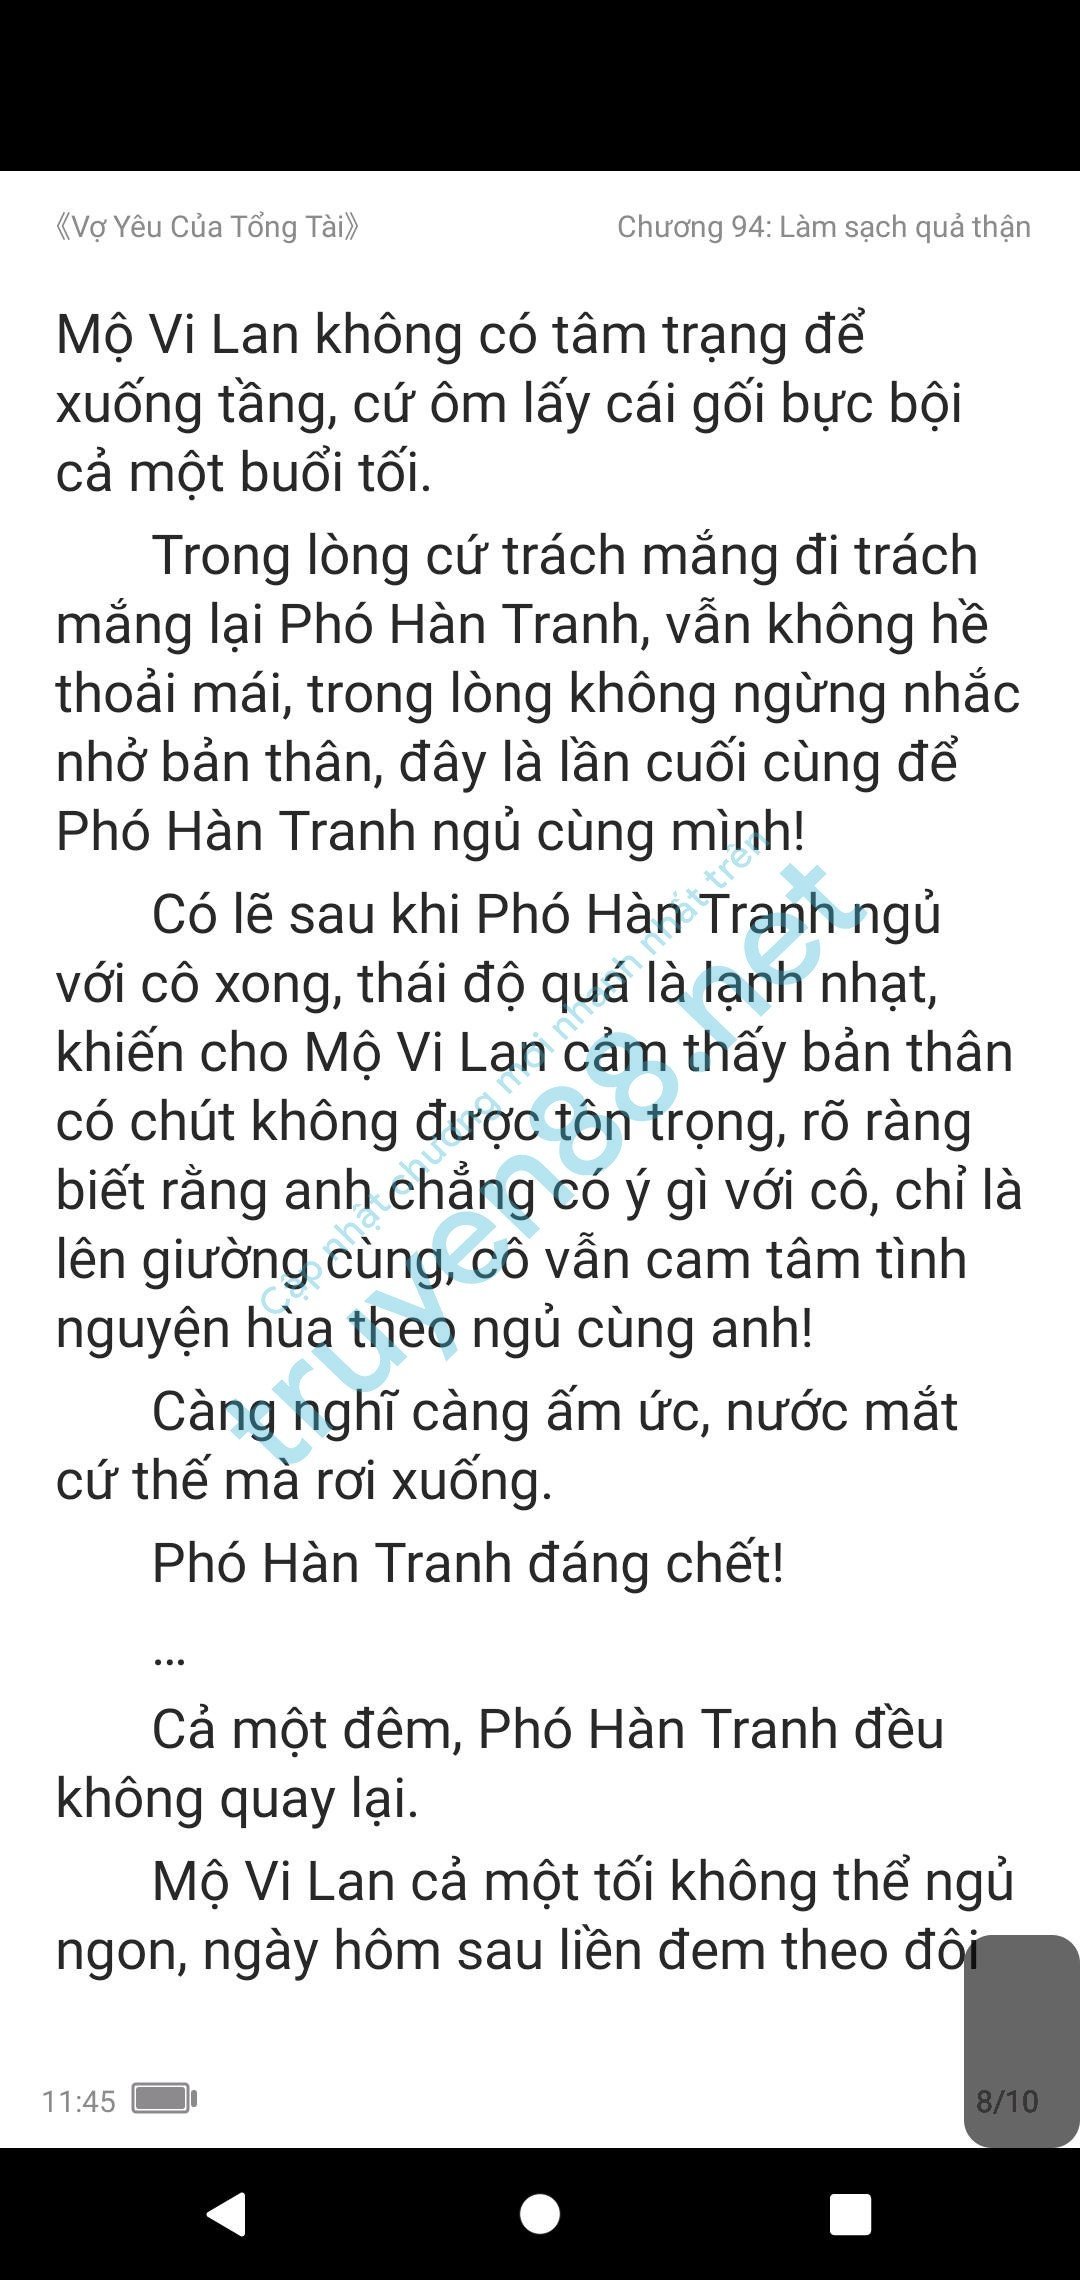 vo-yeu-cua-tong-tai-mo-vi-lan--pho-han-tranh-94-0